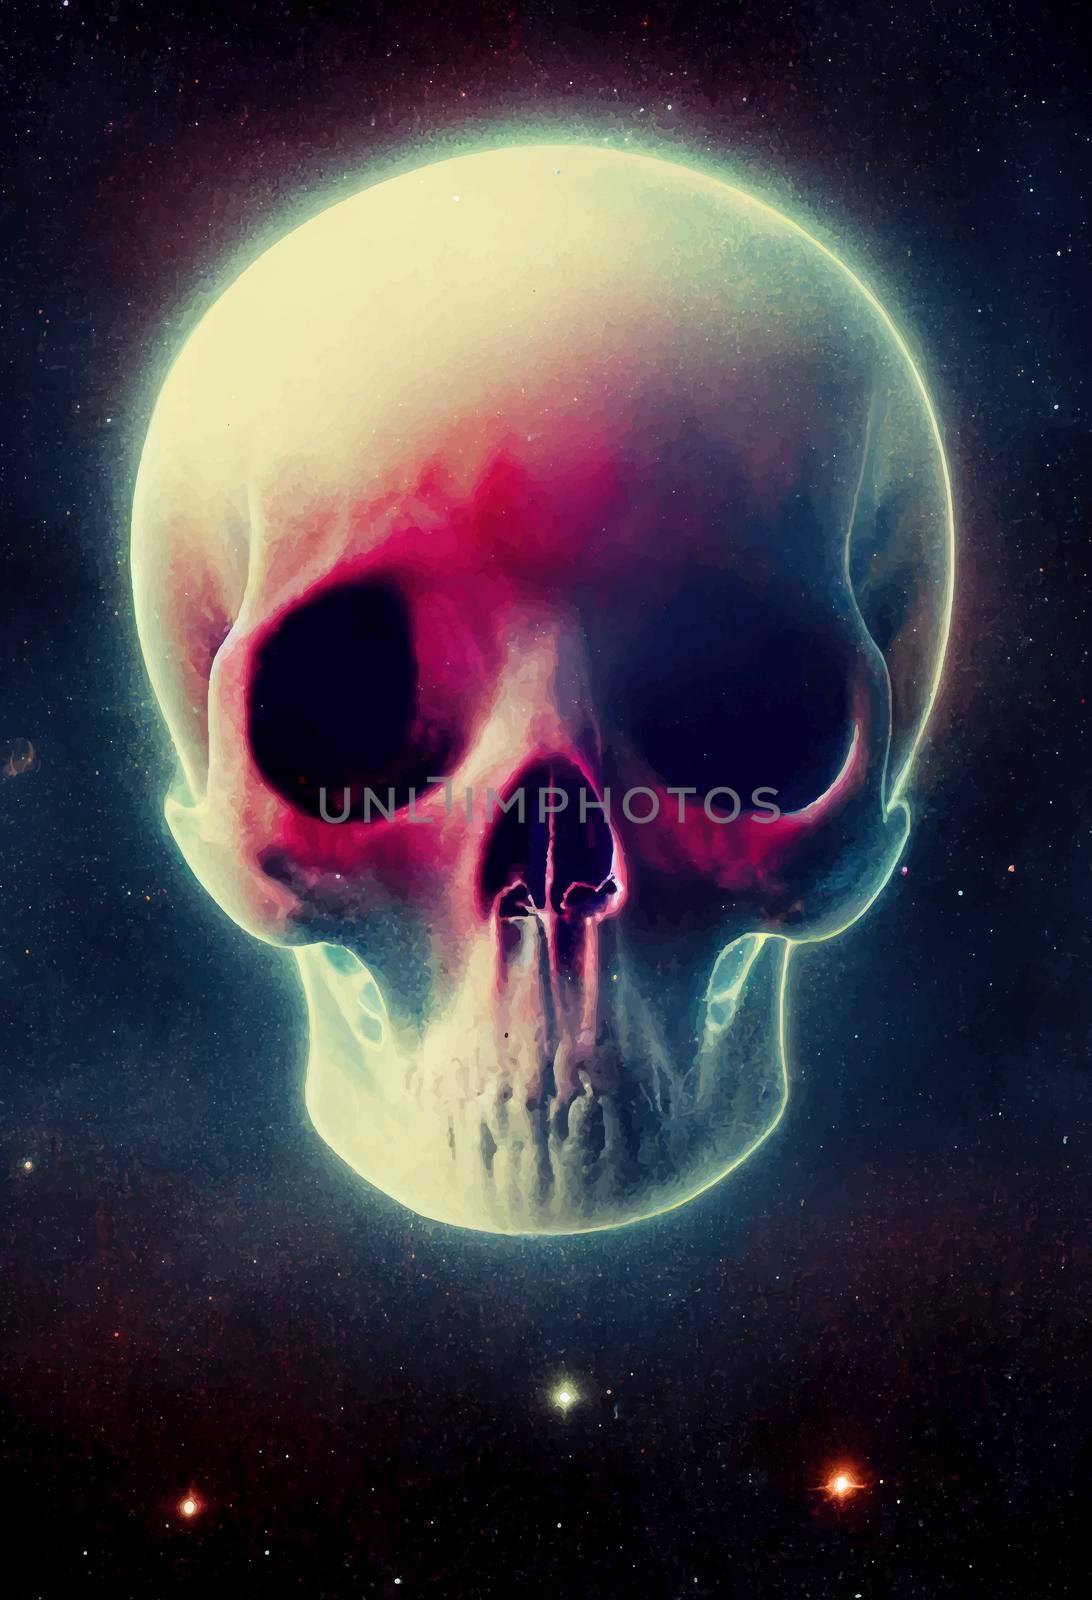 nebula in outer space. nebula shaped like a human skull by JpRamos